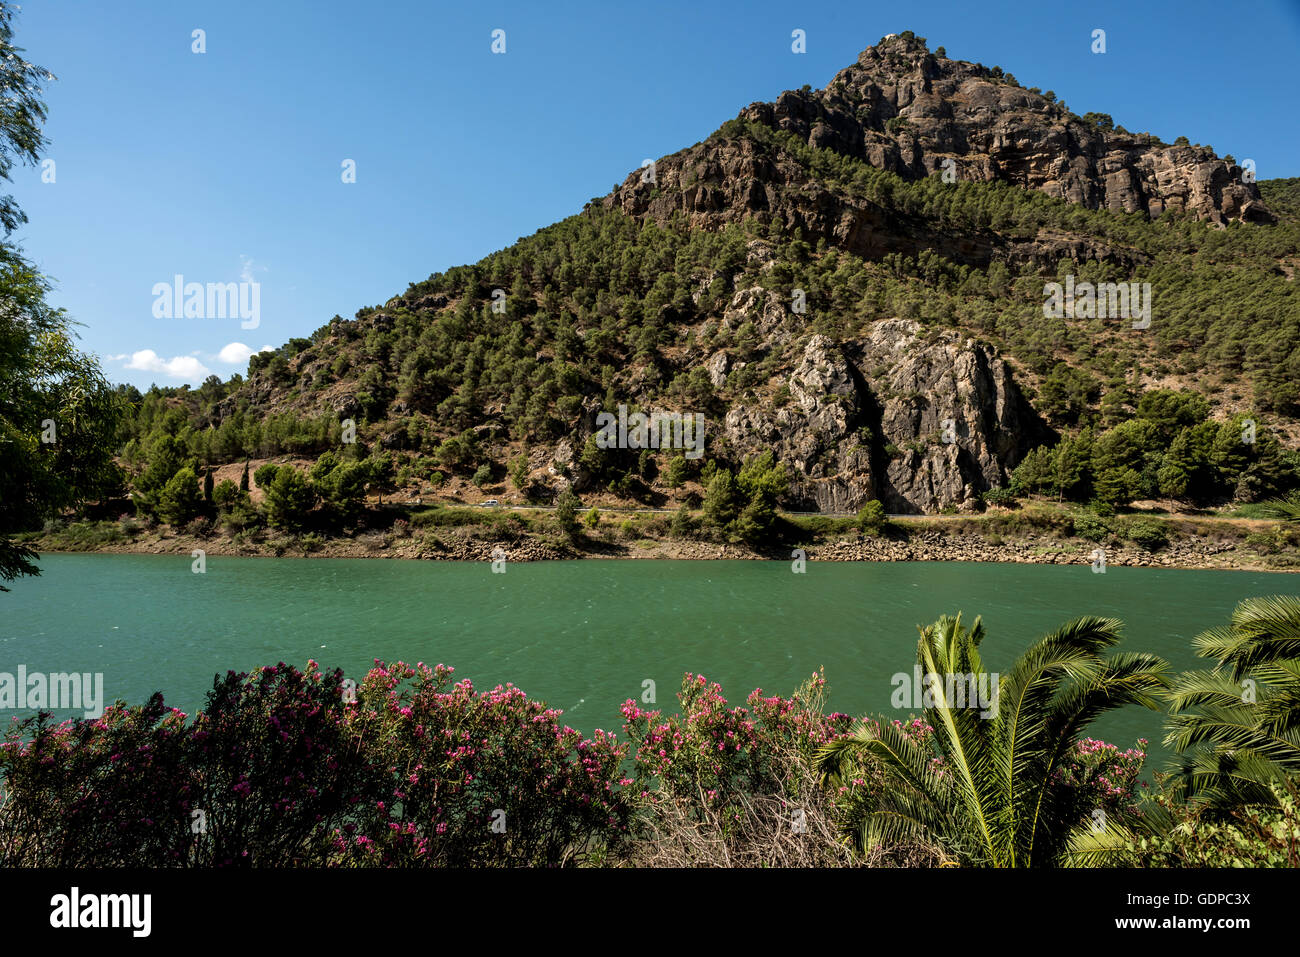 Der Caminito del Rey in Südspanien. Stockfoto